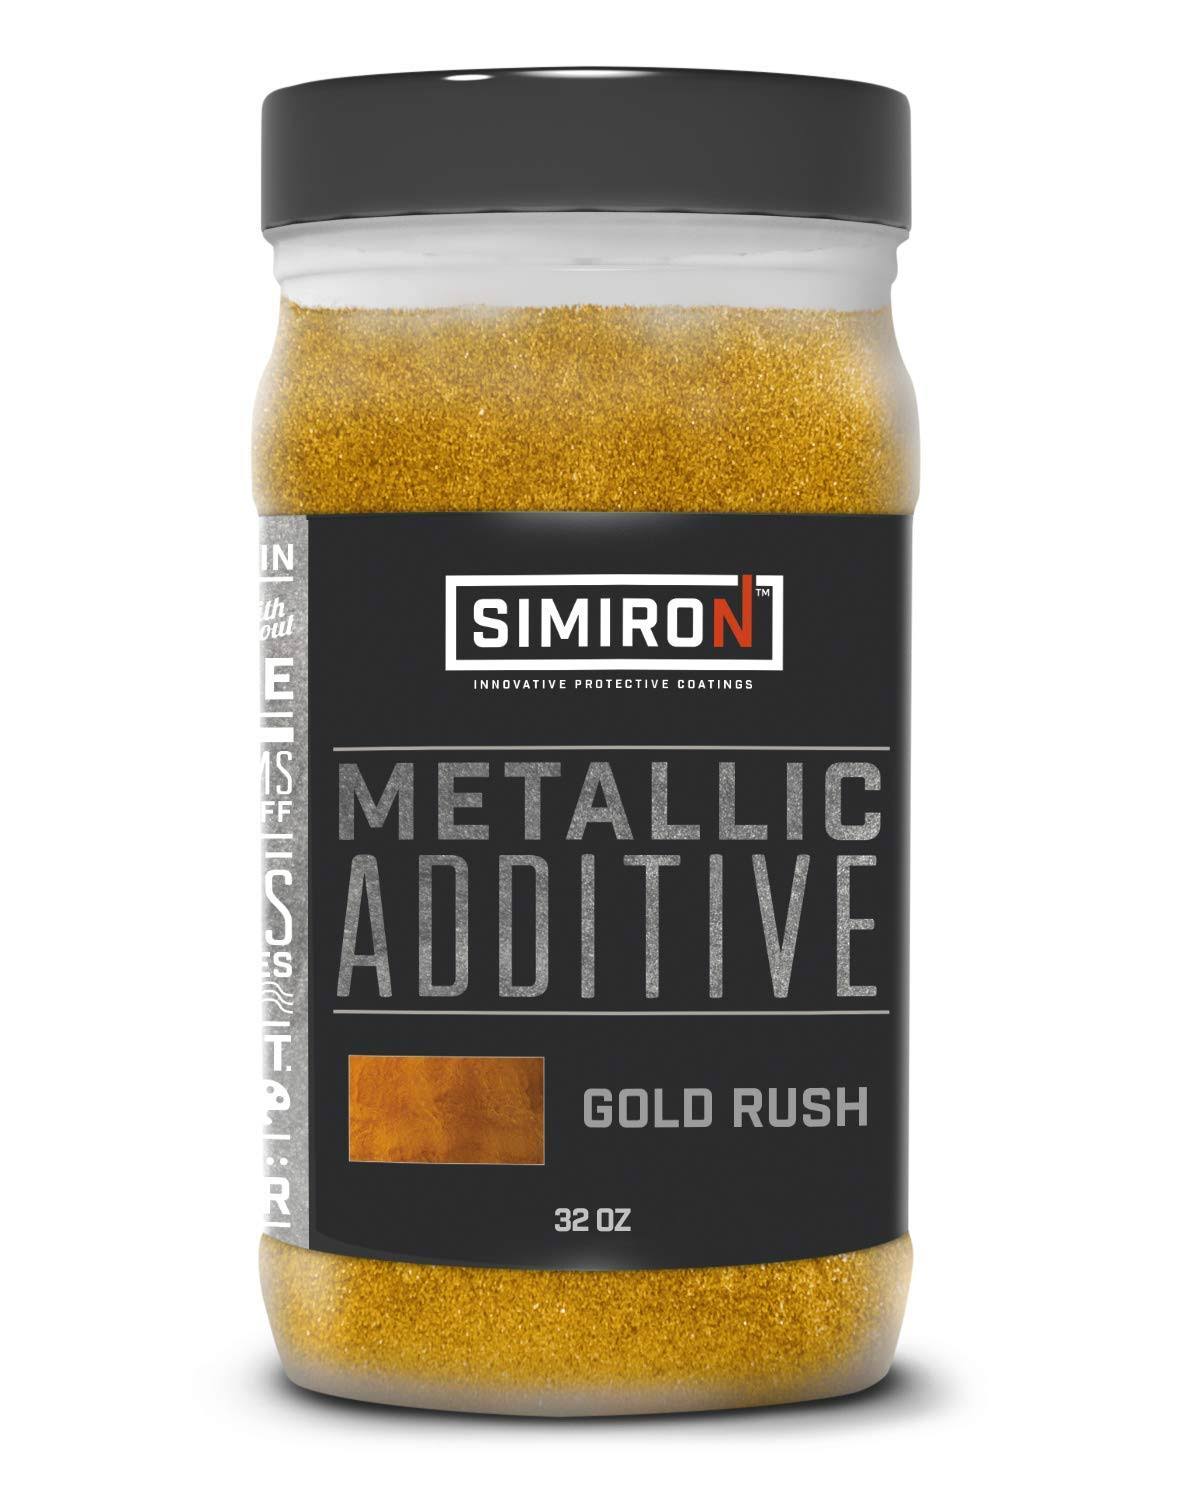 Simiron Metallic Additive, Gold Rush